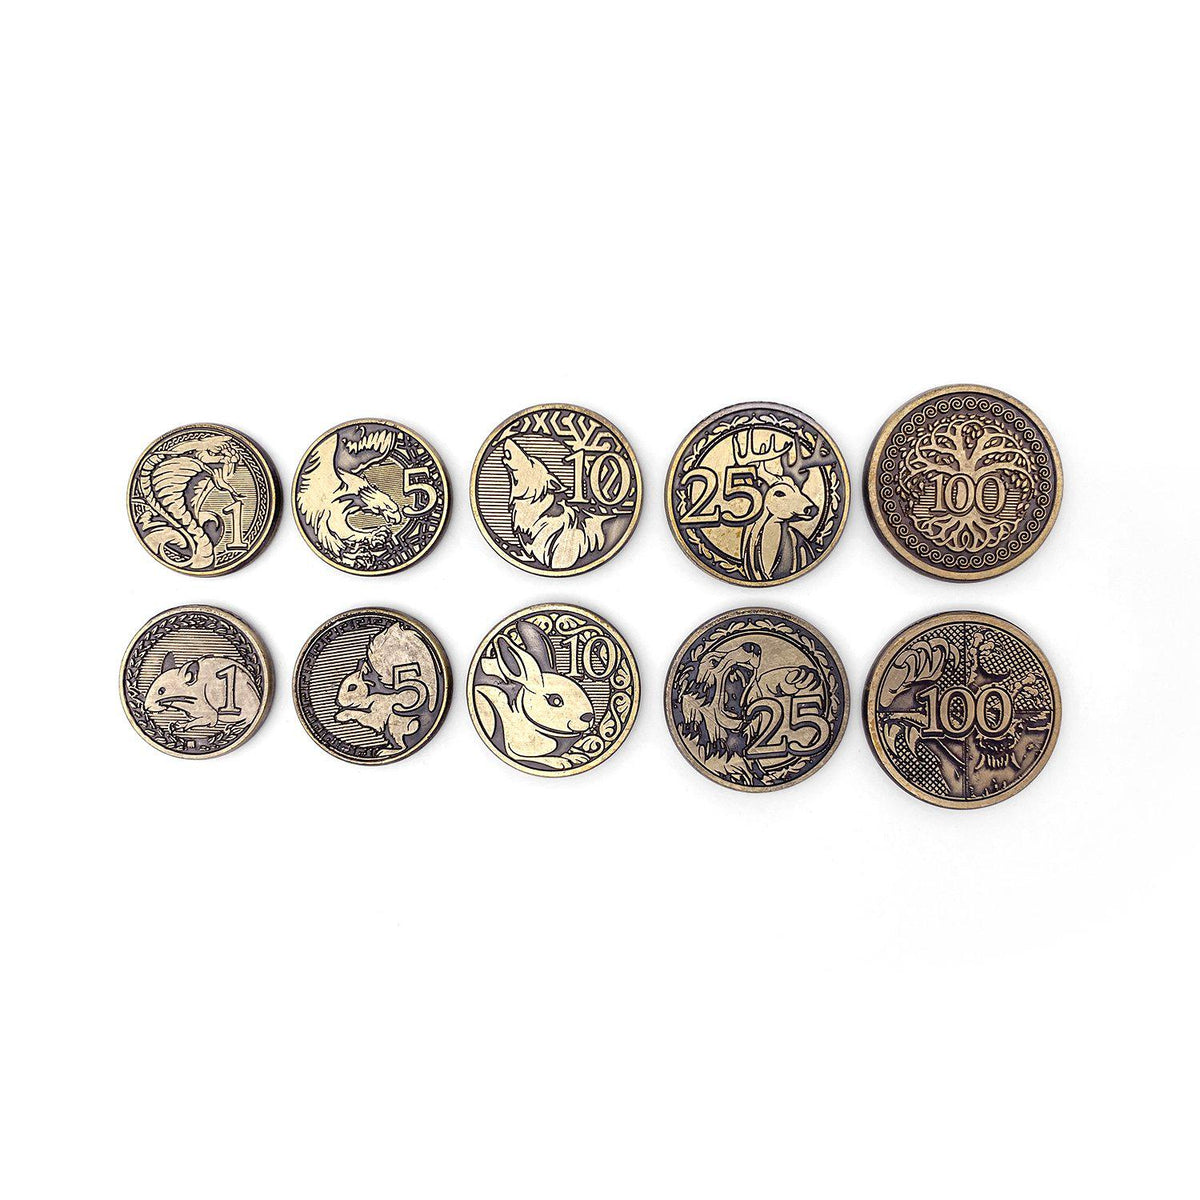 Adventure Coins - Predator or Prey Coins Set of 10